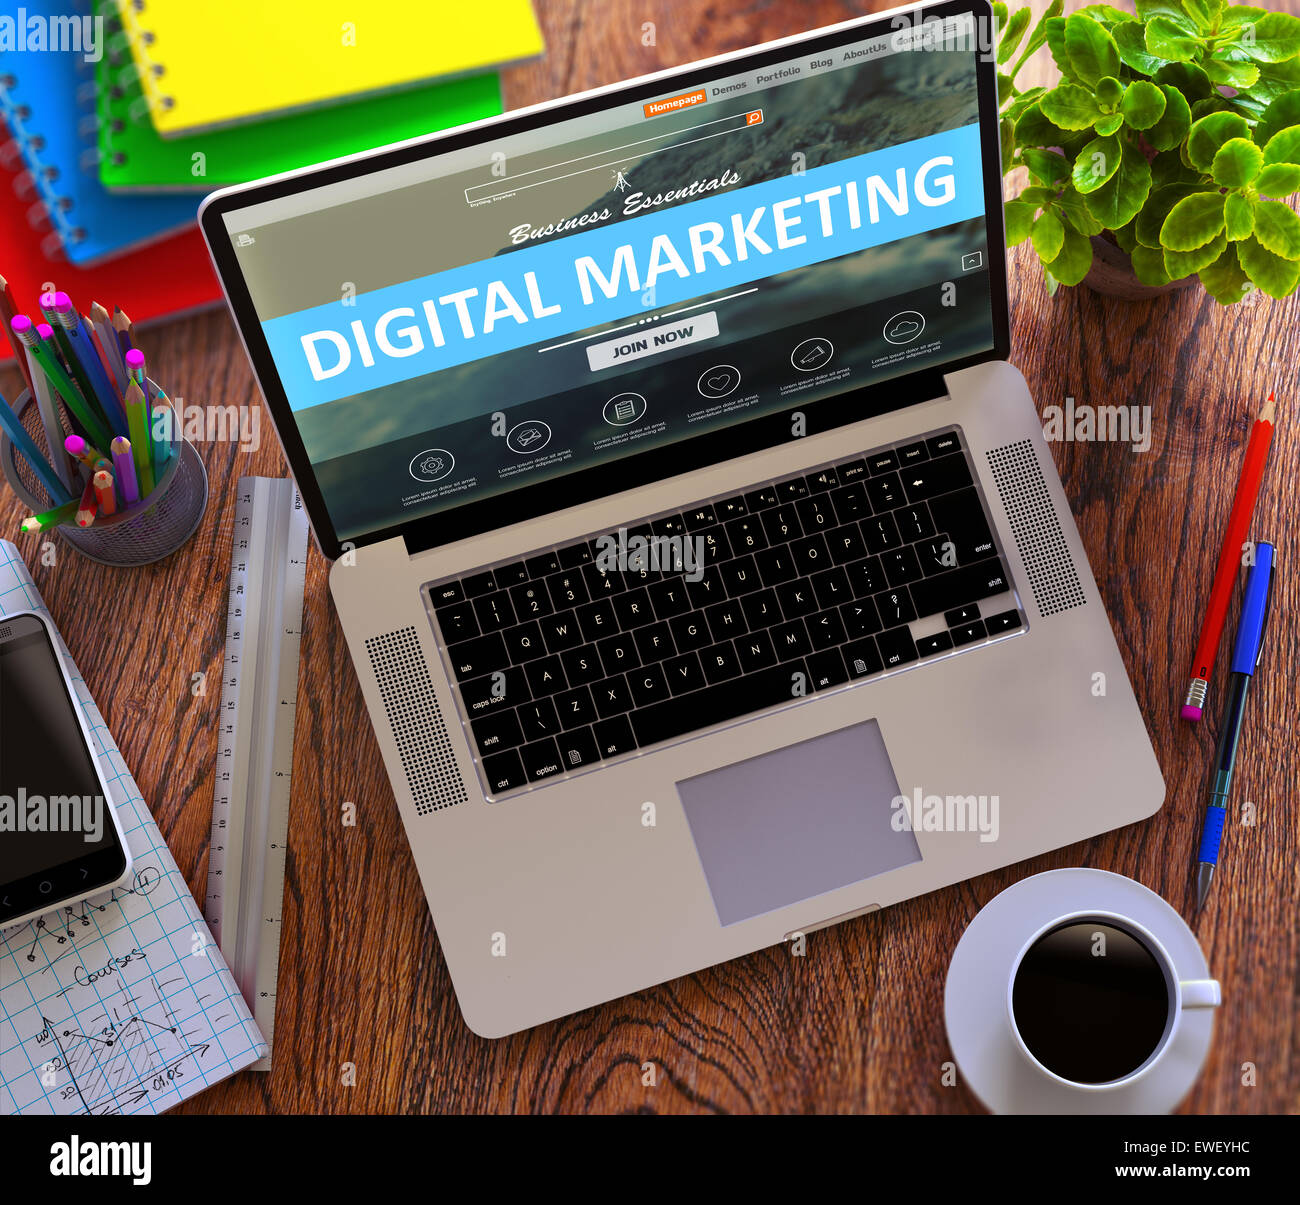 Digital Marketing Concept on Modern Laptop Screen. Stock Photo